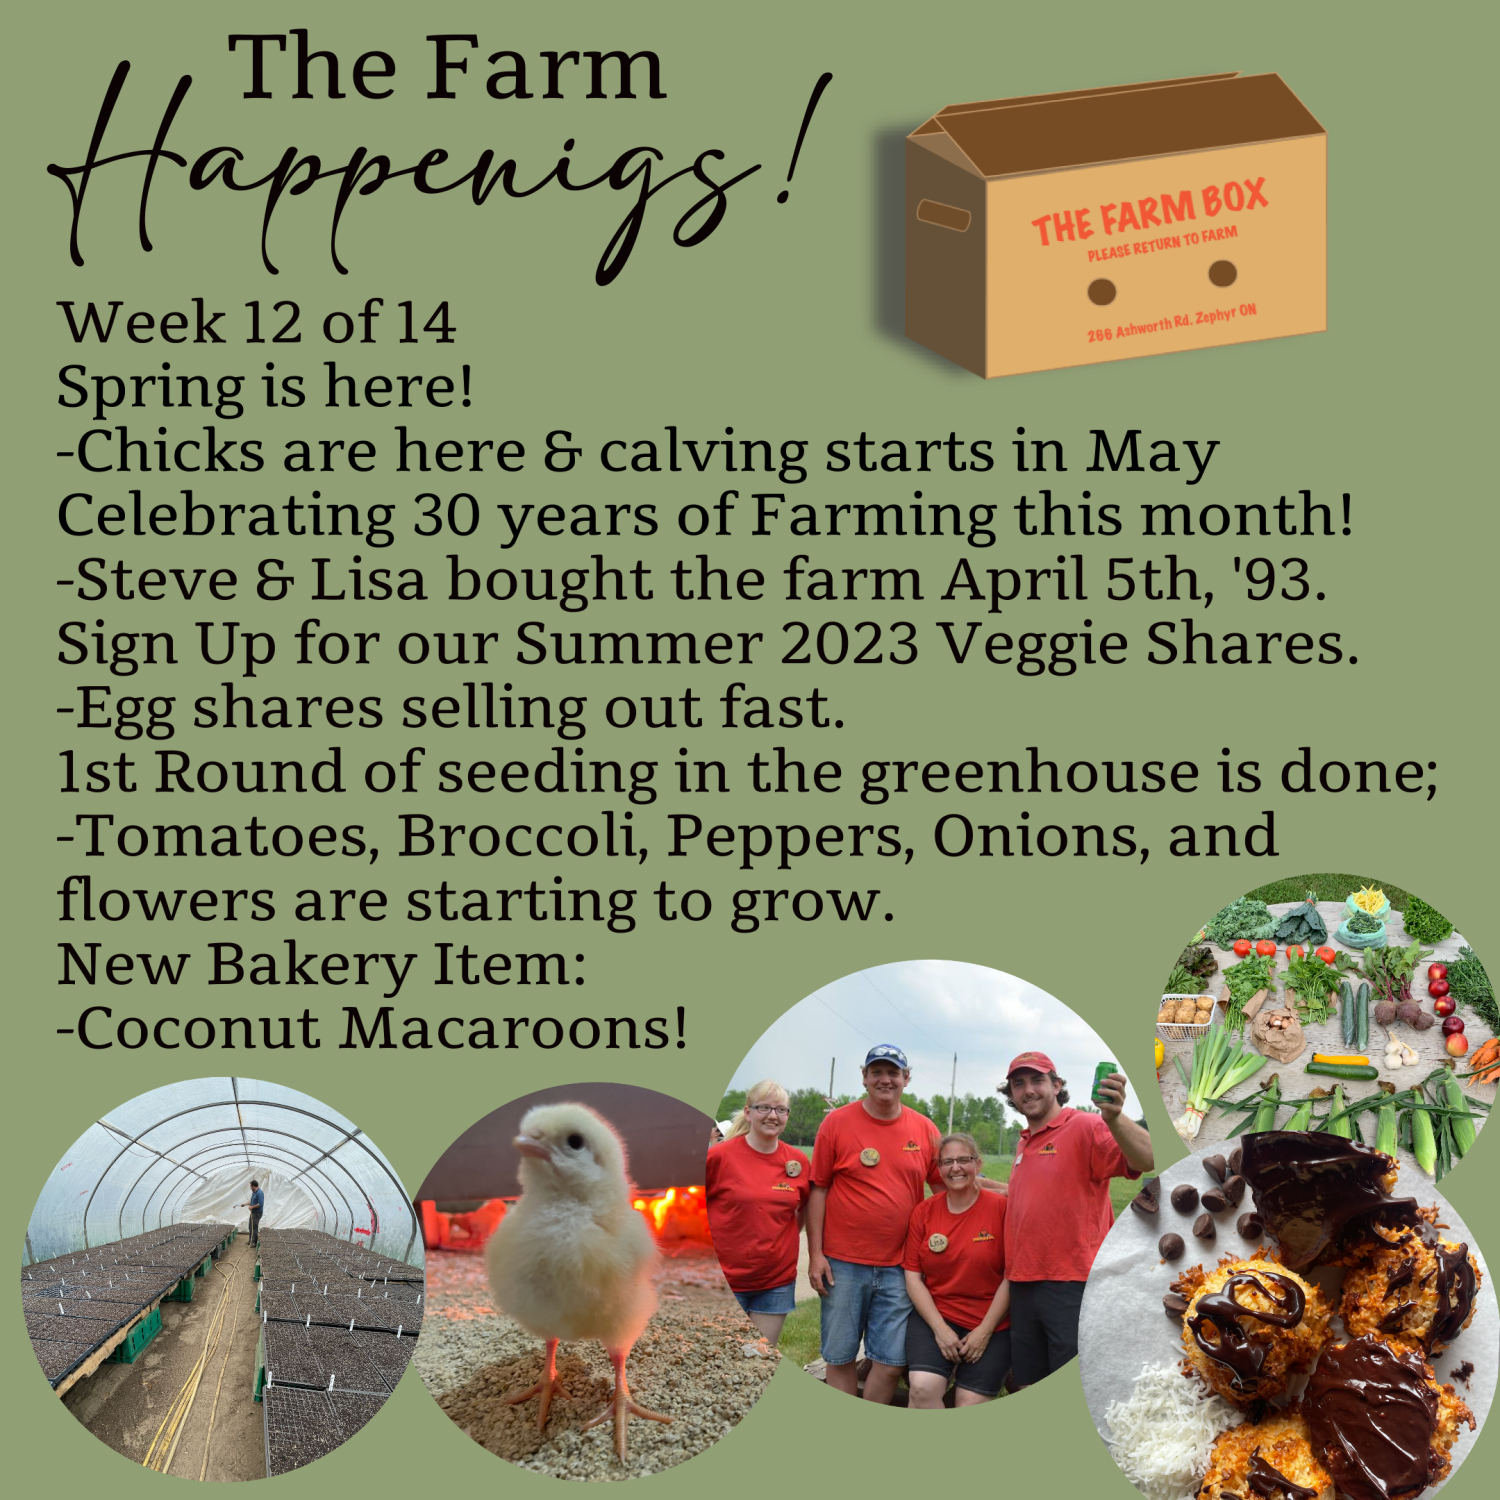 "The Farm Box"-Coopers CSA Farm Farm Happenings Winter/Spring Week 12